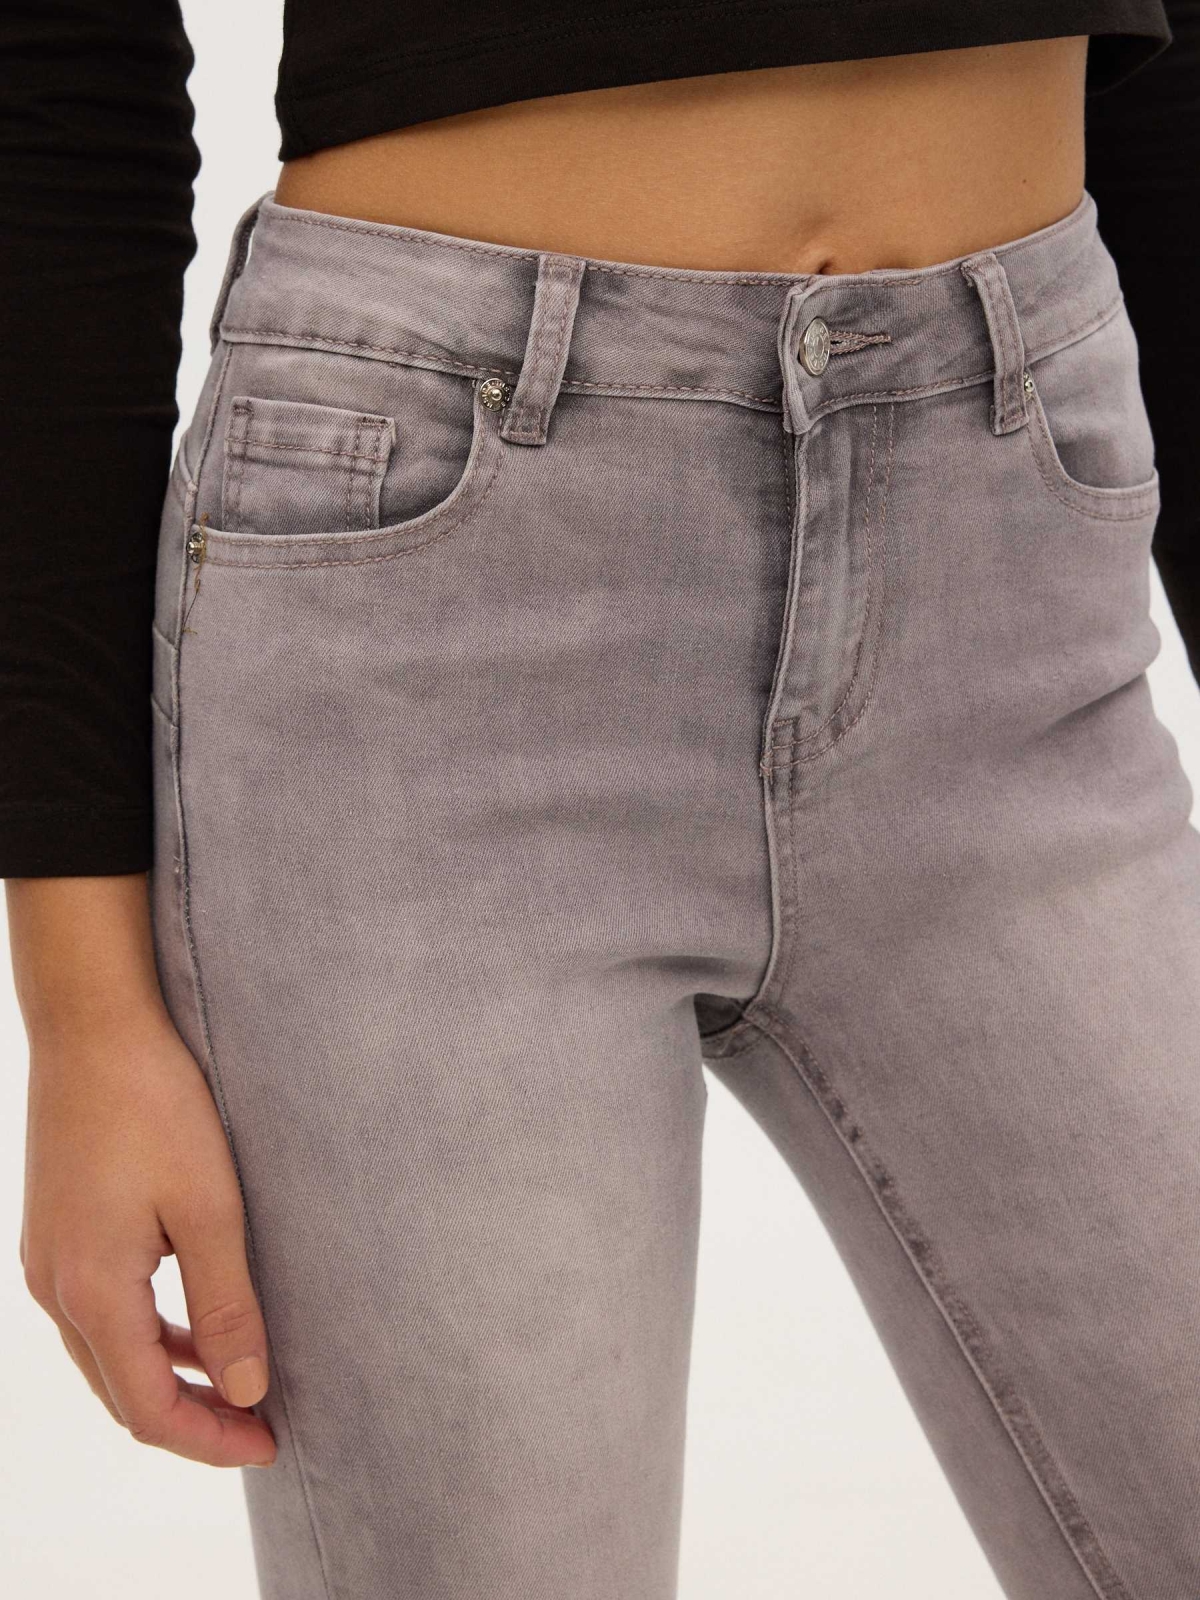 Jeans skinny push up cinza claro vista detalhe